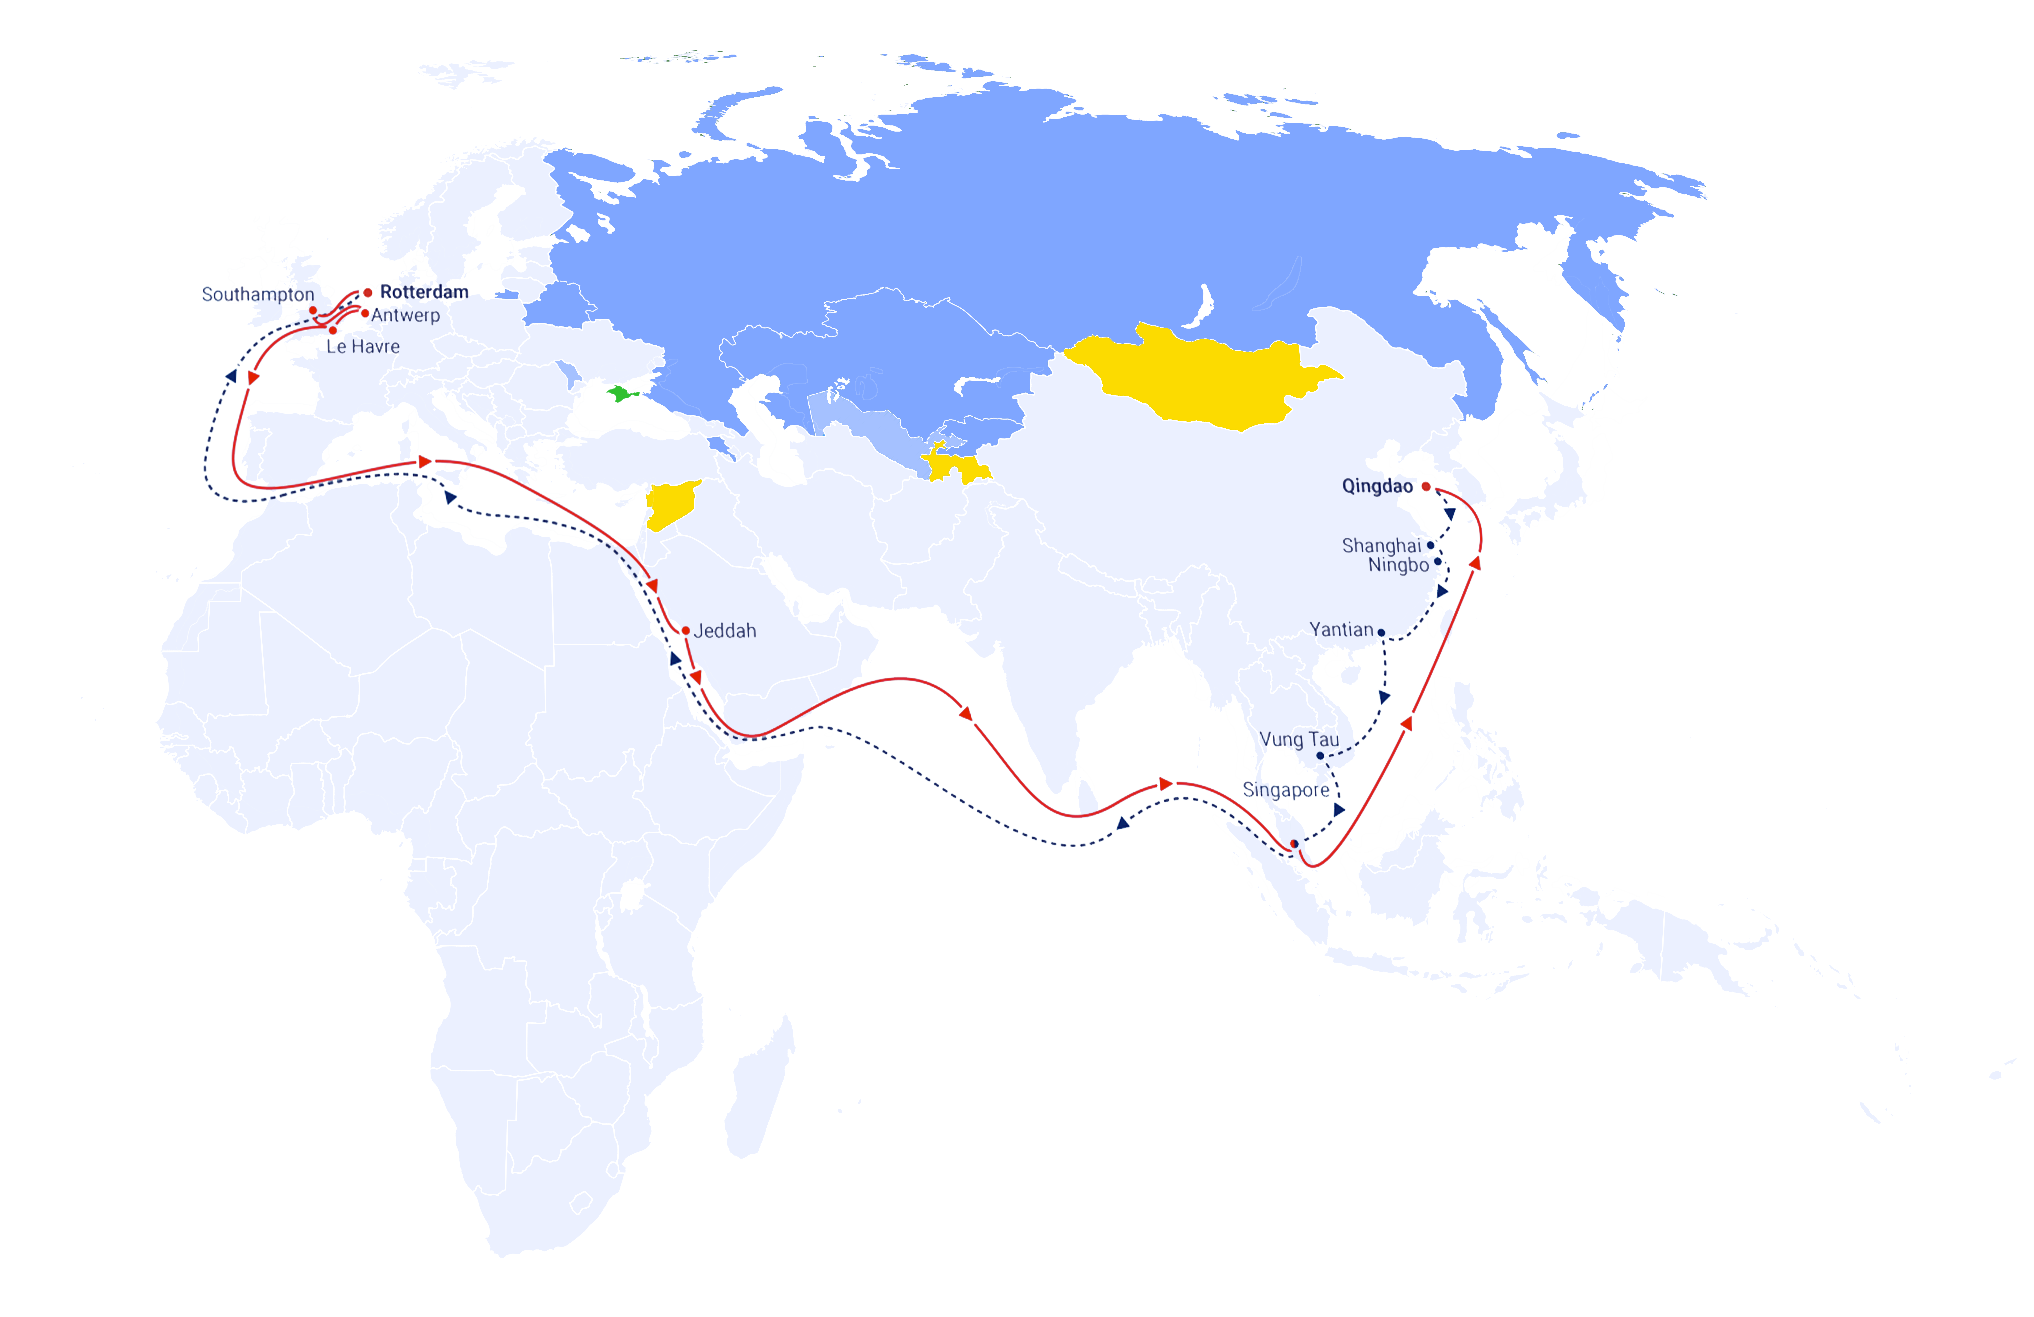 eurasianbol map,eurasianbol data,tendata,import export data